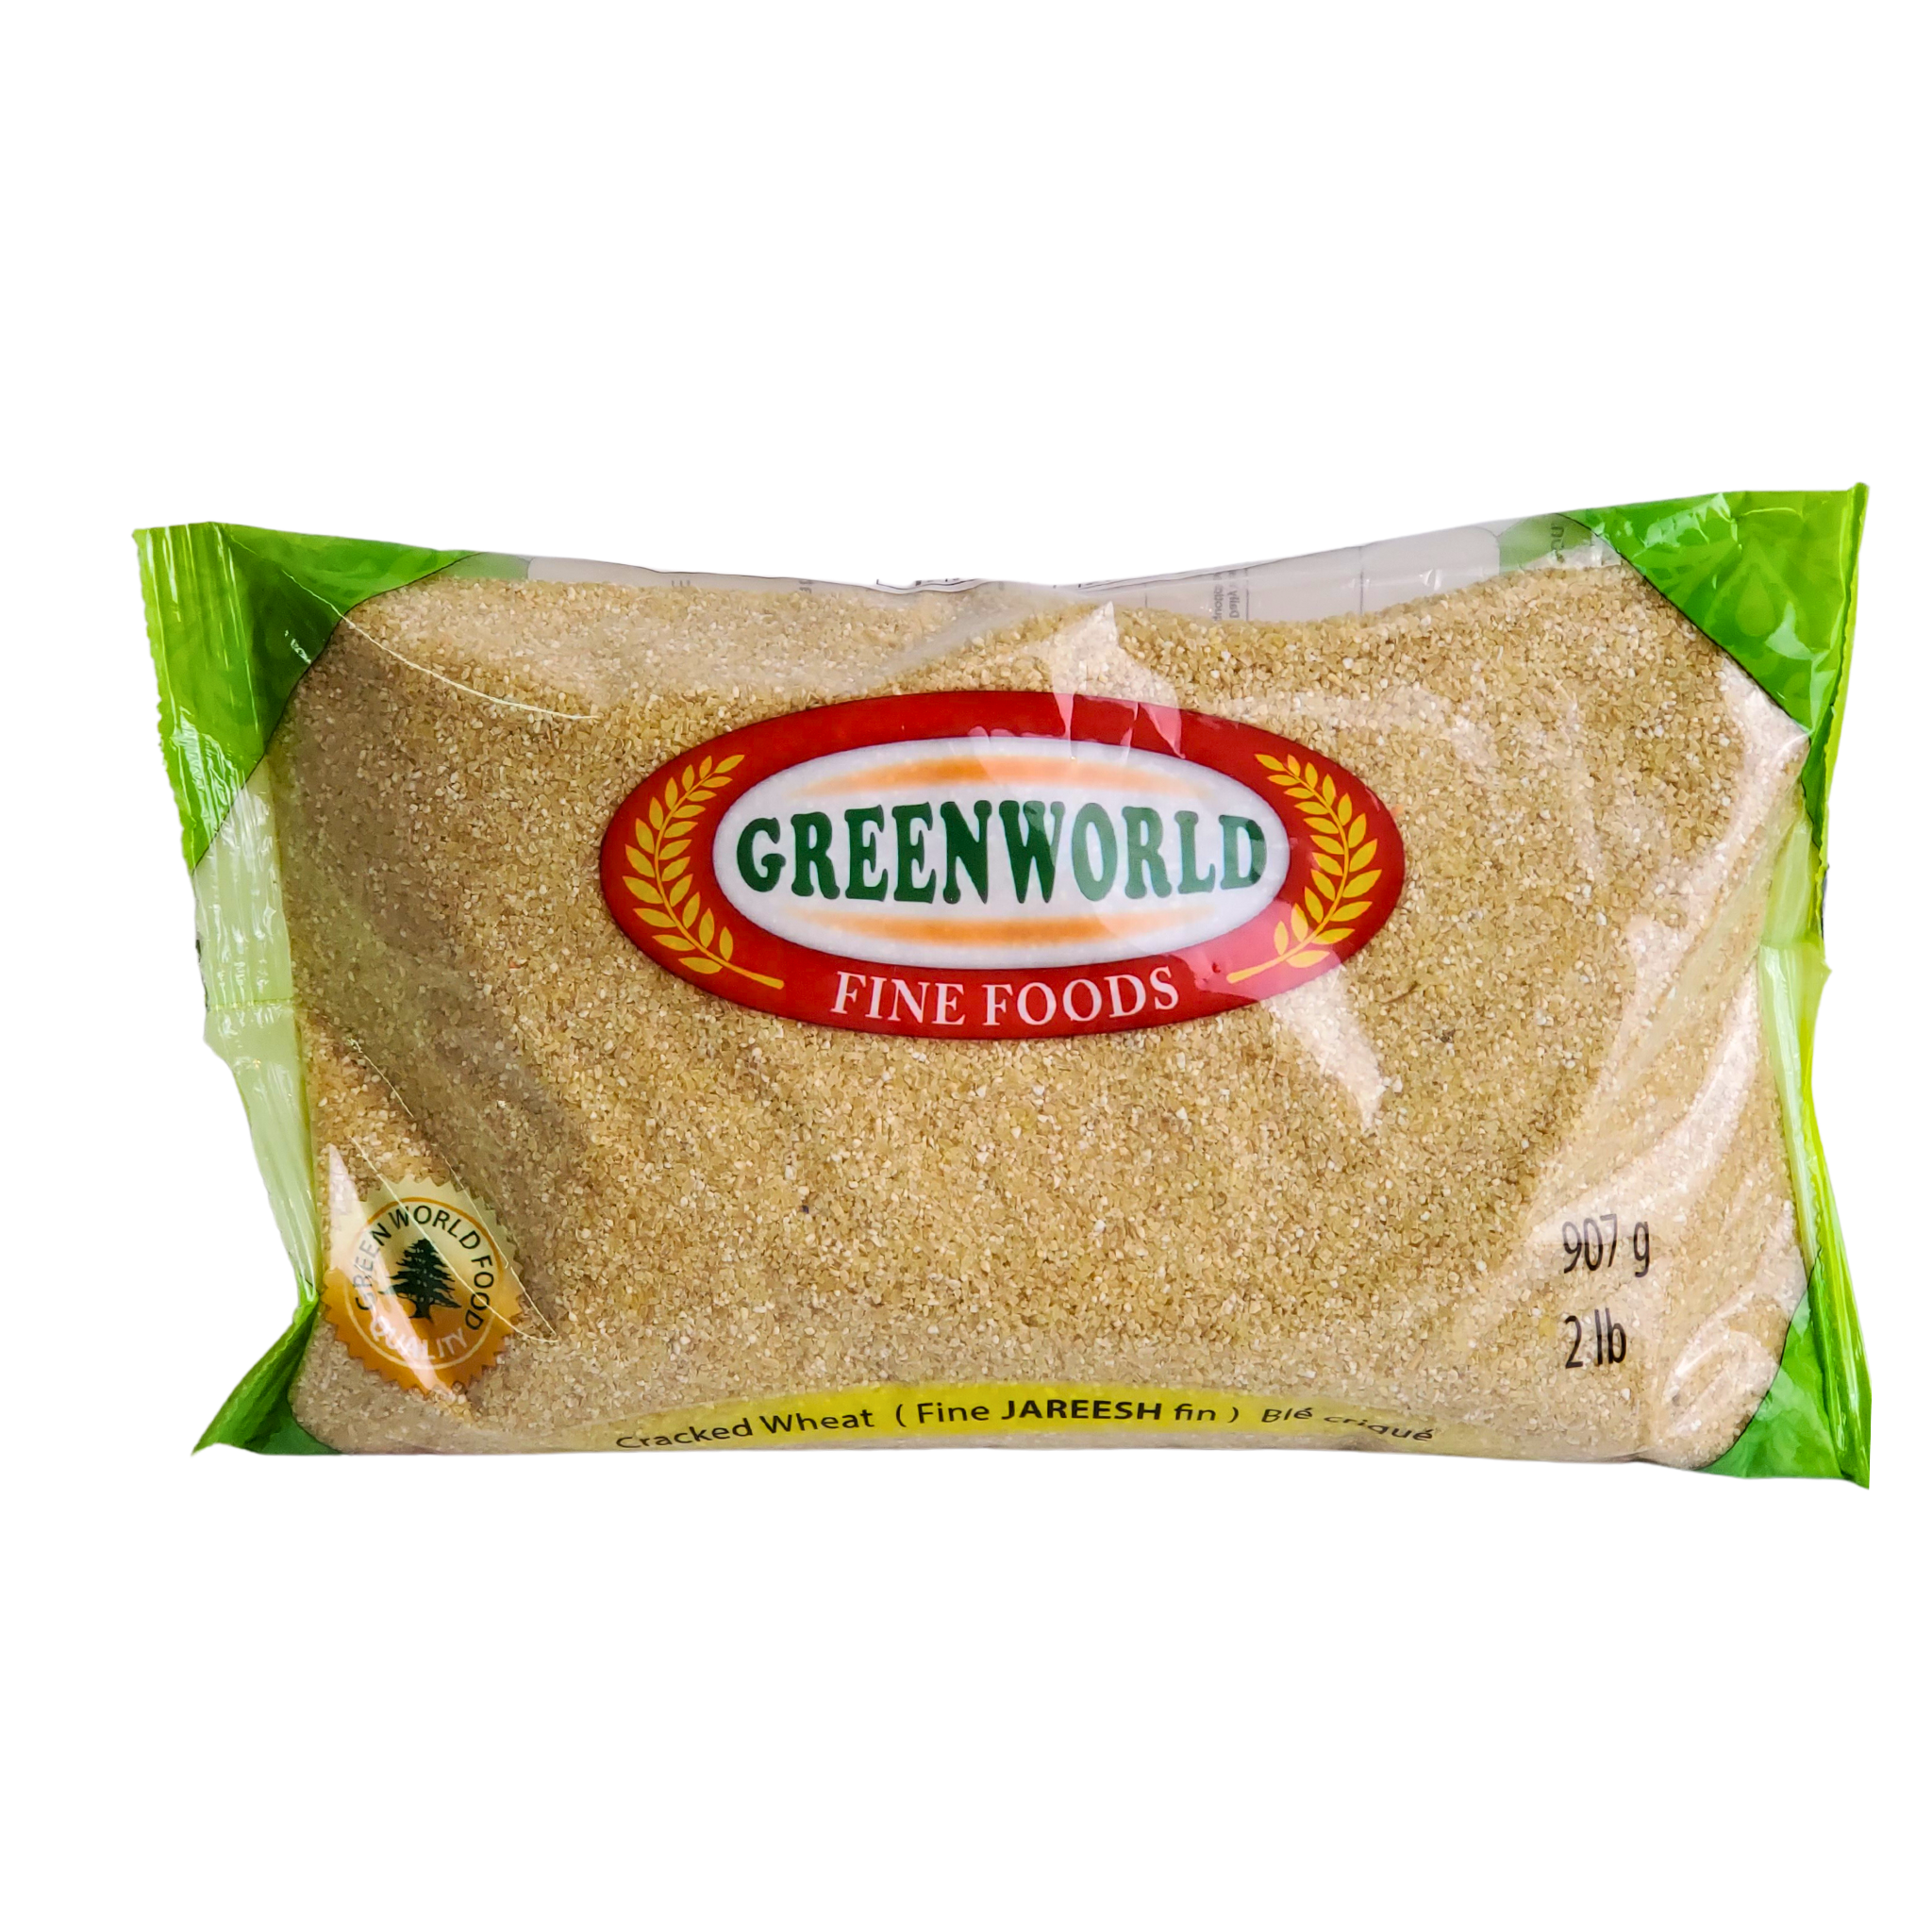 Greenworld Fine Foods Cracked Wheat (Fine Jareesh) 907g